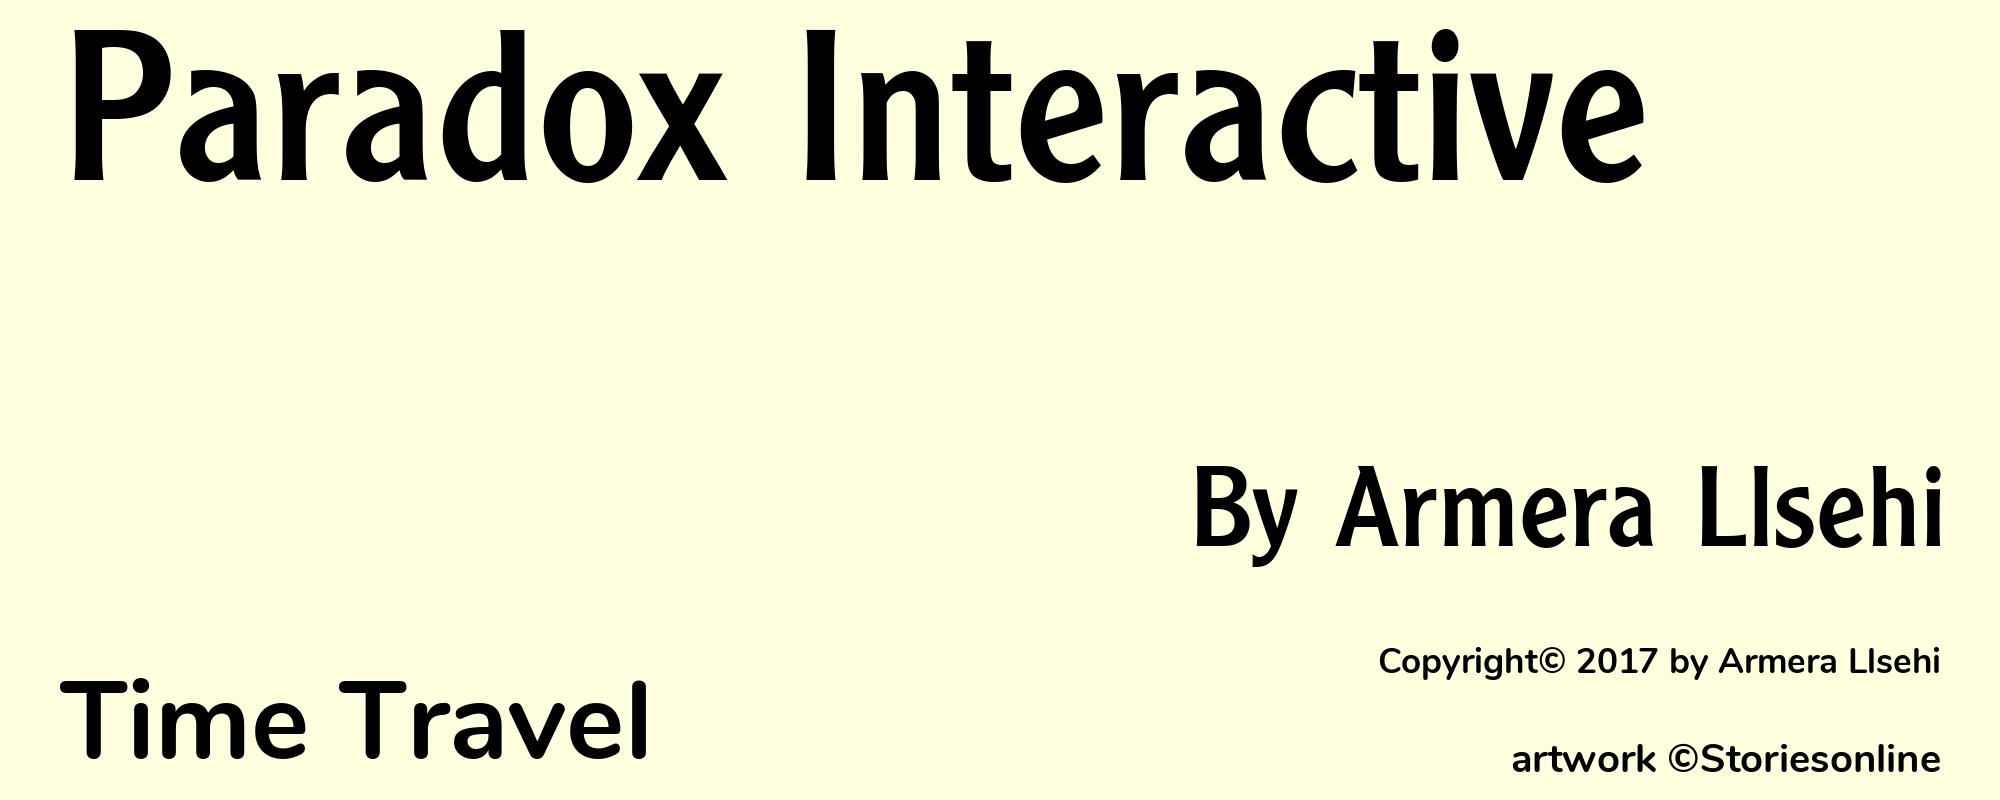 Paradox Interactive - Cover